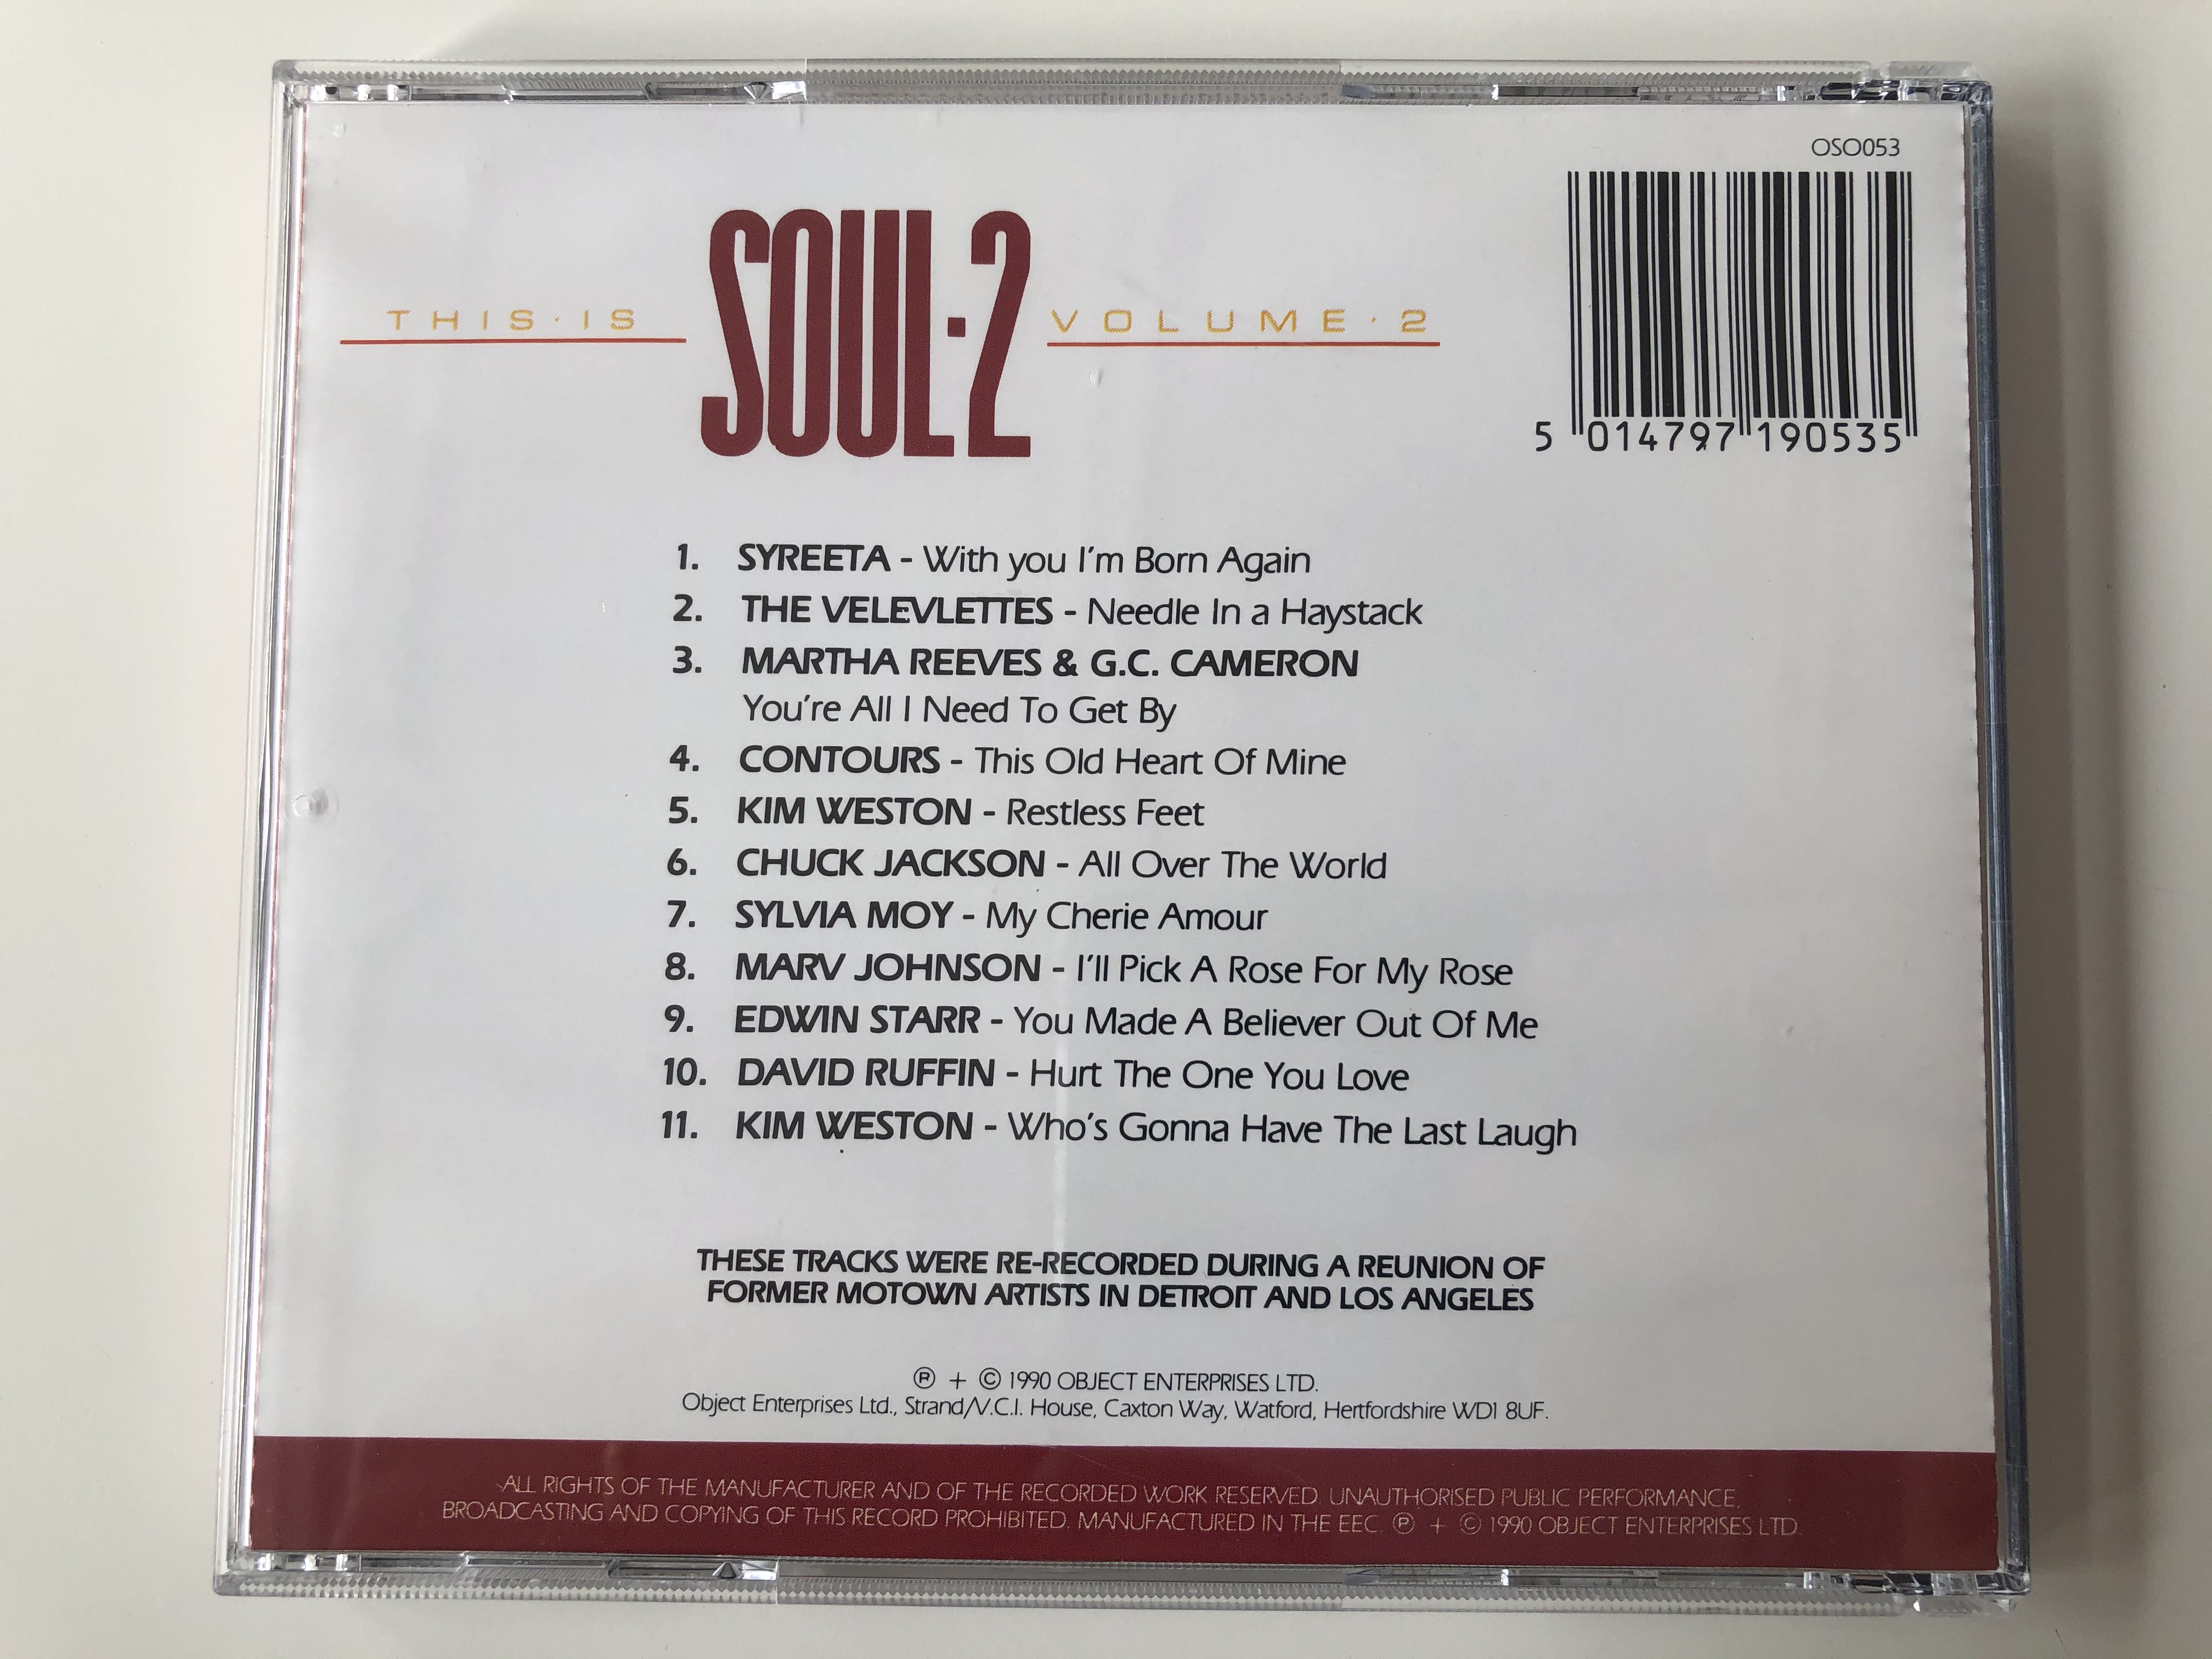 this-is-soul-2-volume-2-object-enterprises-ltd.-audio-cd-1990-oso053-4-.jpg